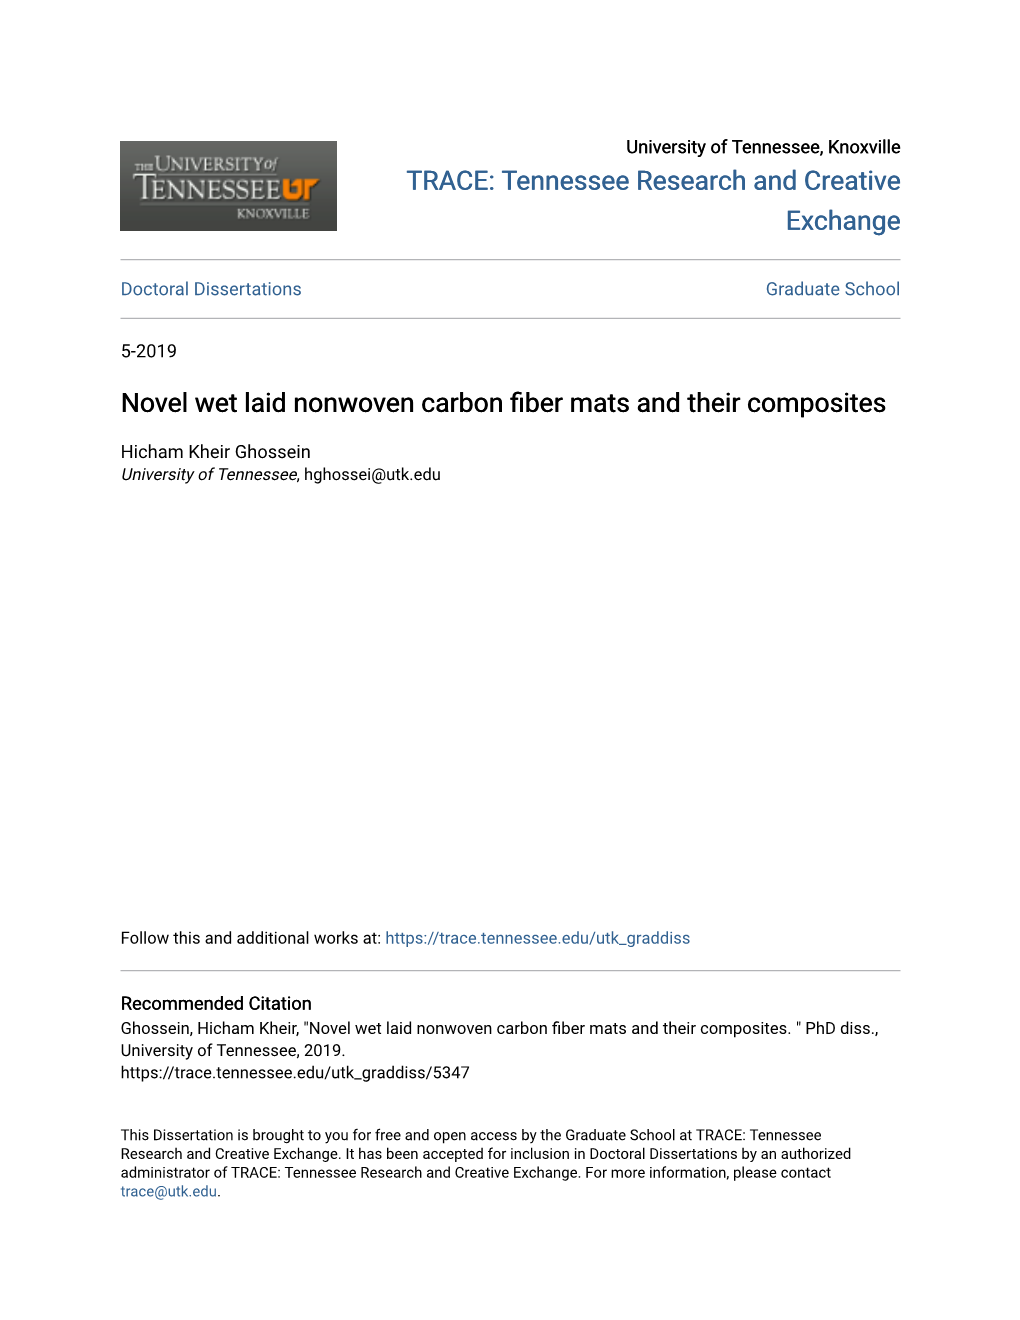 Novel Wet Laid Nonwoven Carbon Fiber Mats and Their Composites